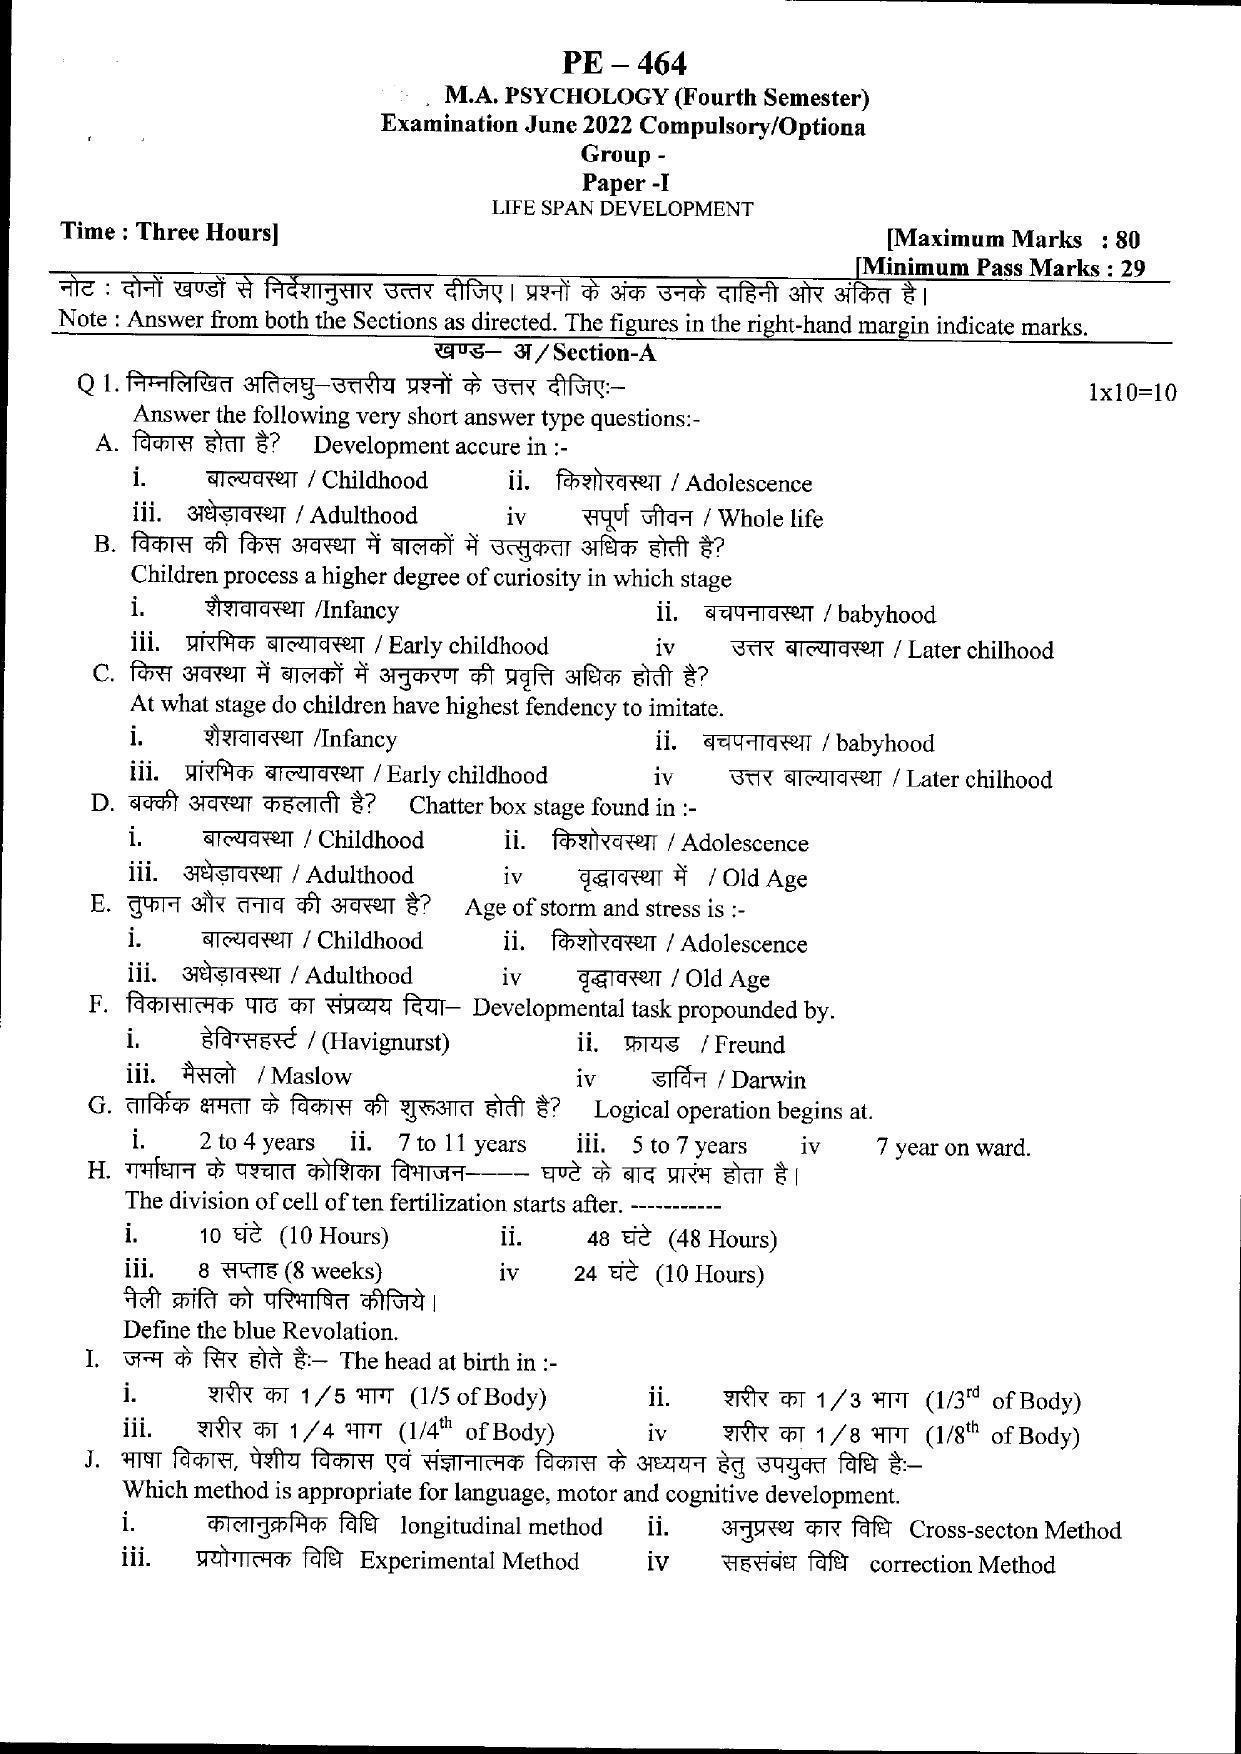 Bilaspur University Question Paper June 2022:M.A. Psychology (Fourth Semester) Life Span Development Paper 1 - Page 1